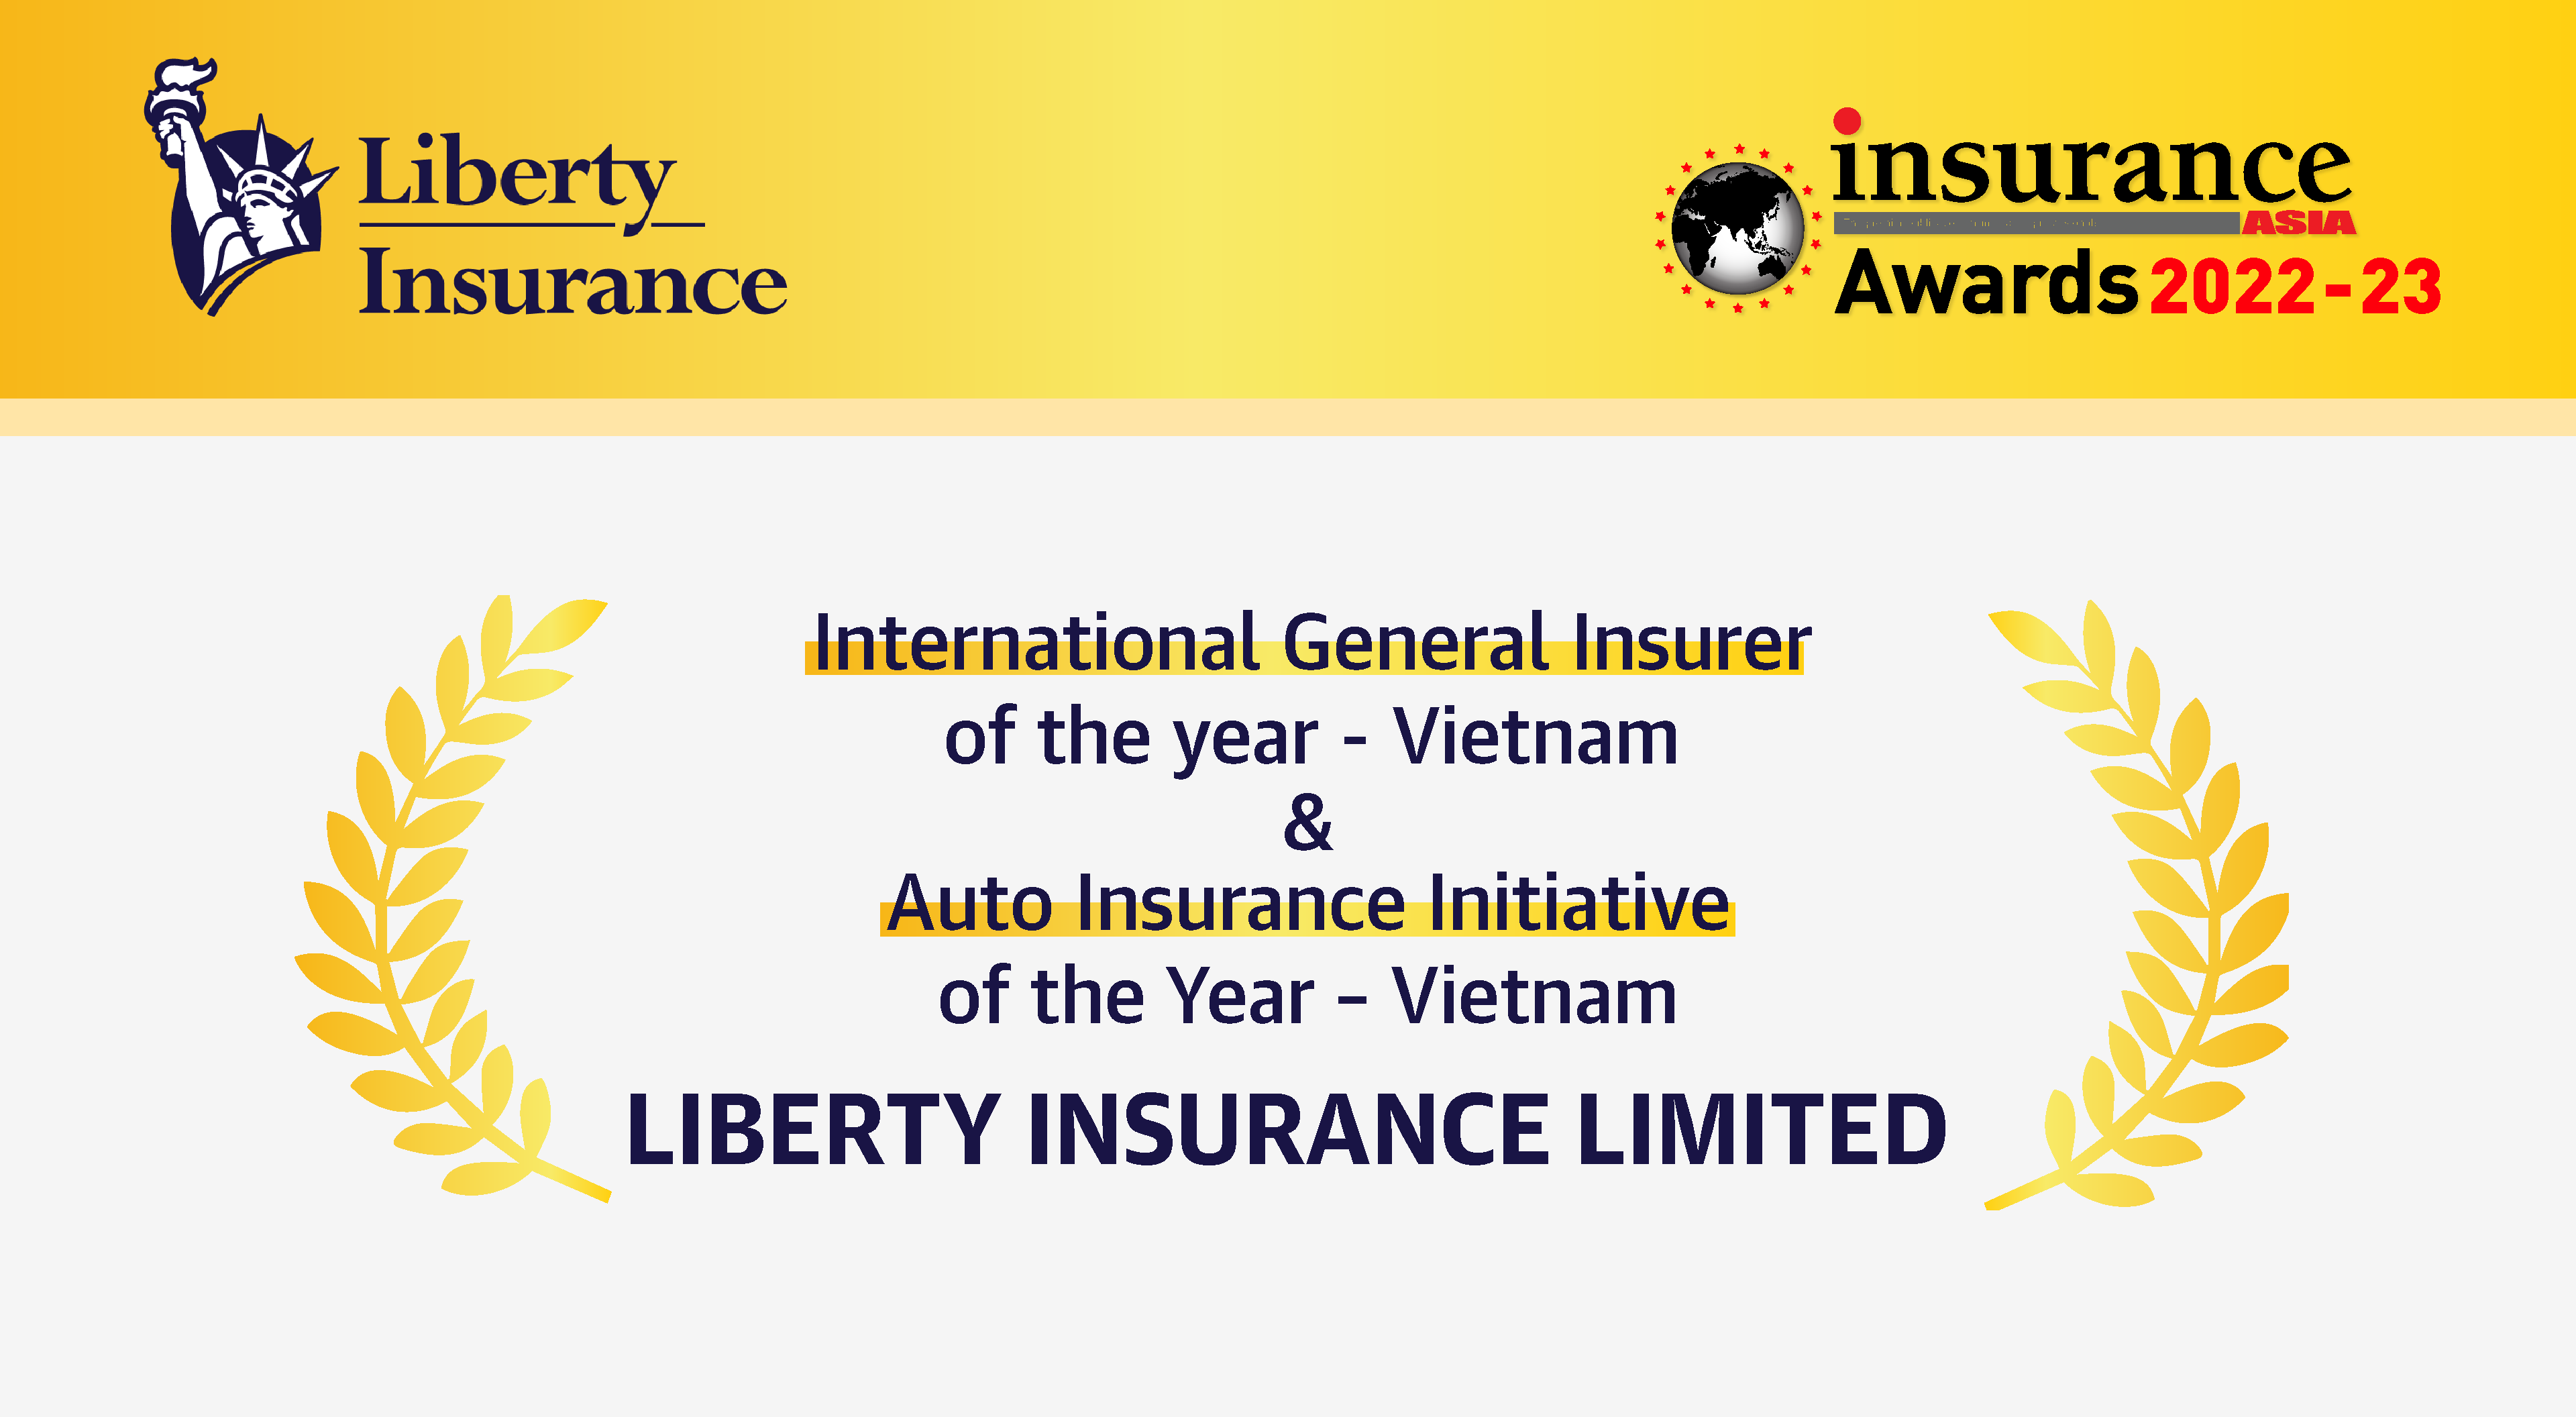 Liberty Insurance with 4 IAA awards in 2 years